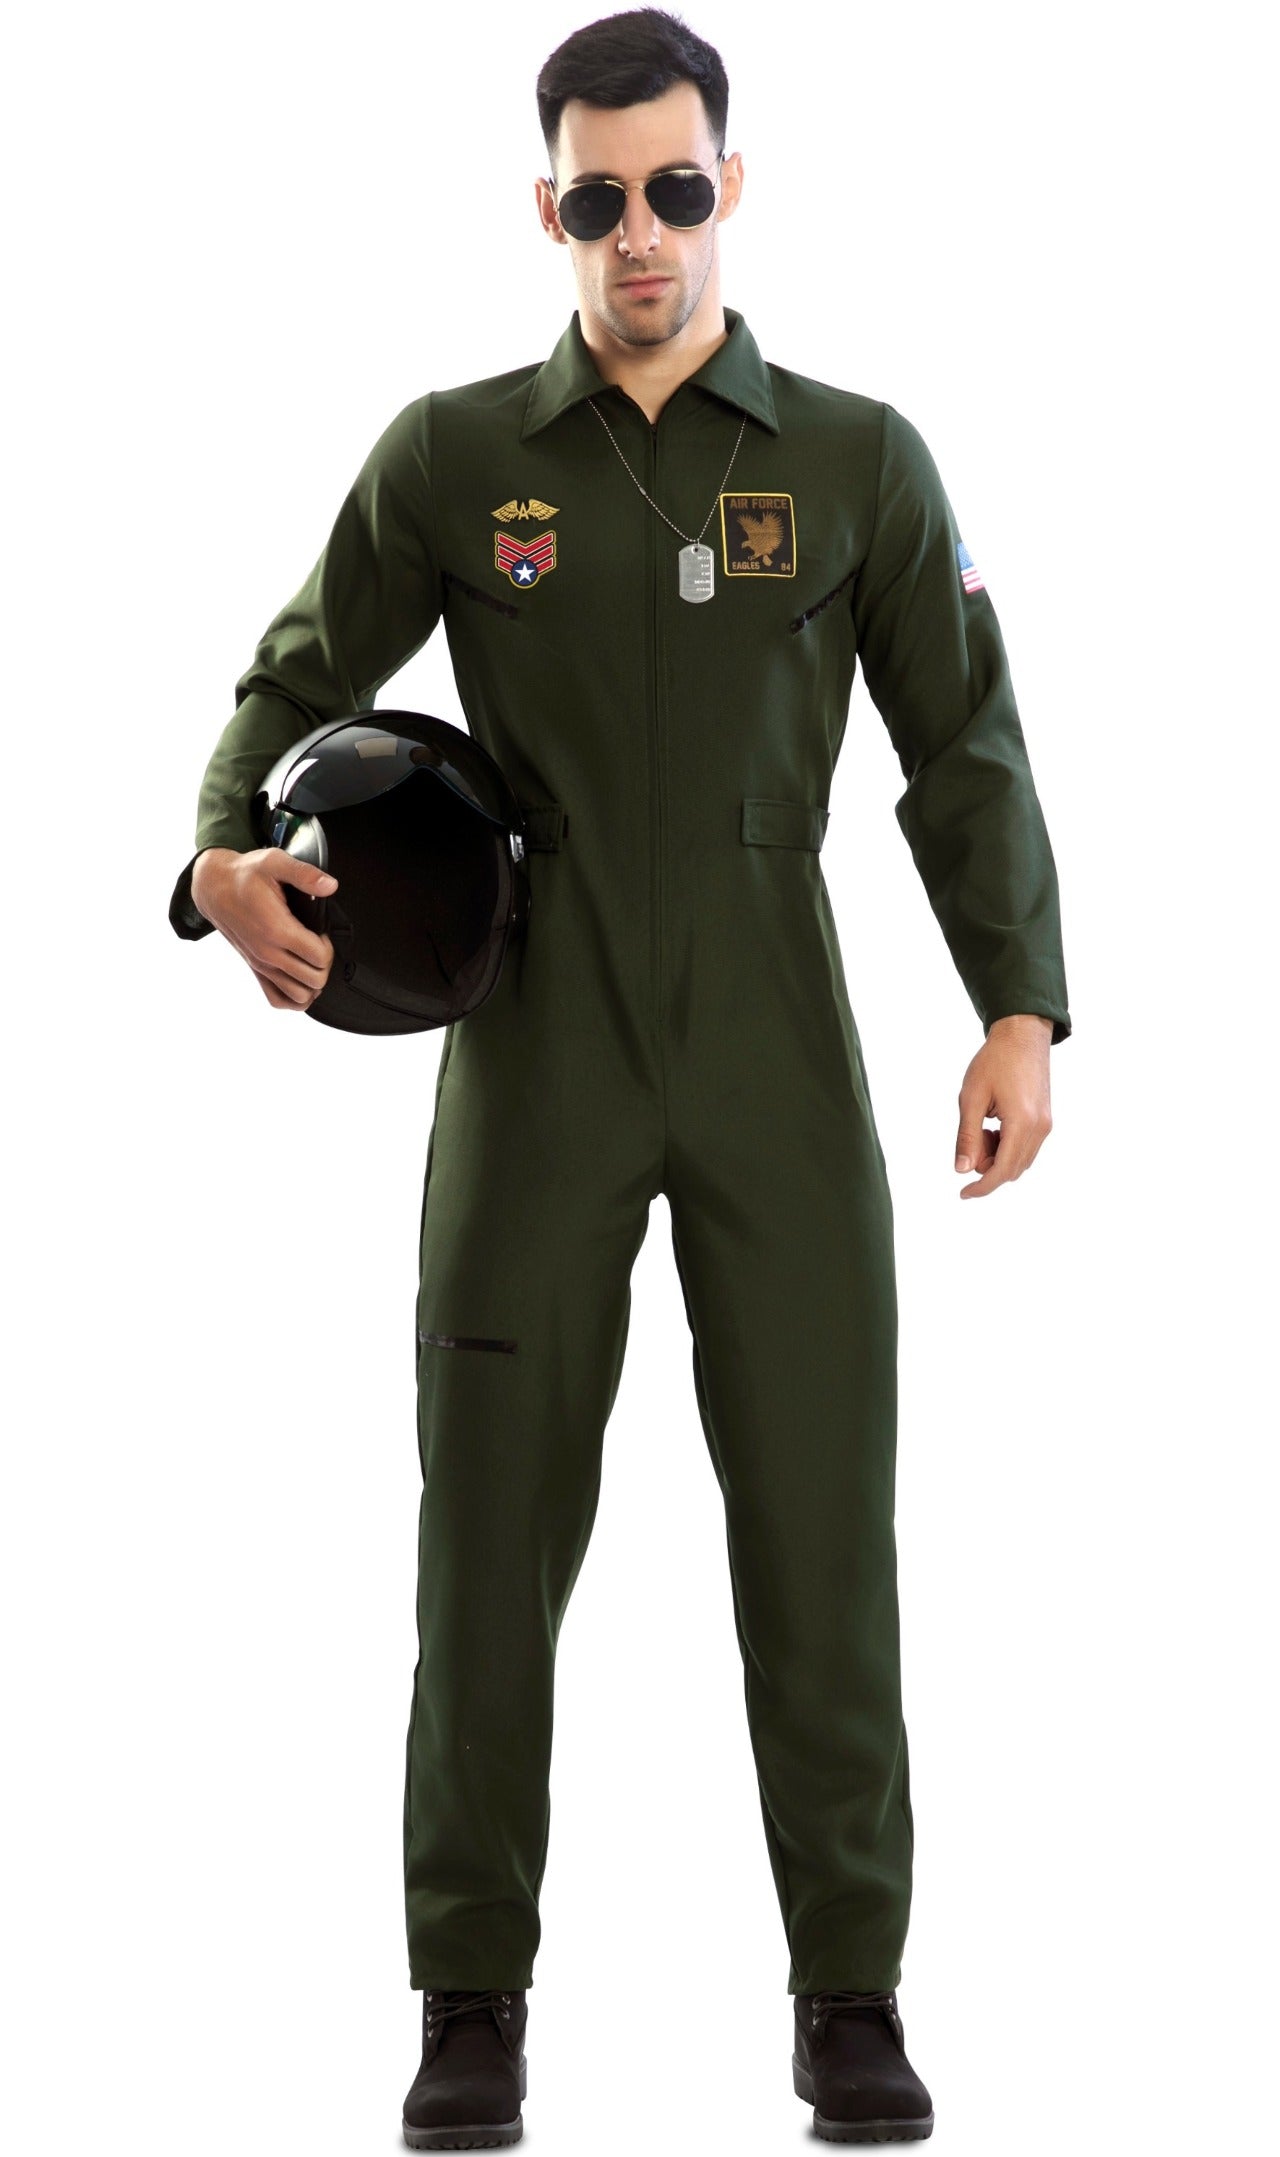 Disfraz de Piloto Militar para mujer